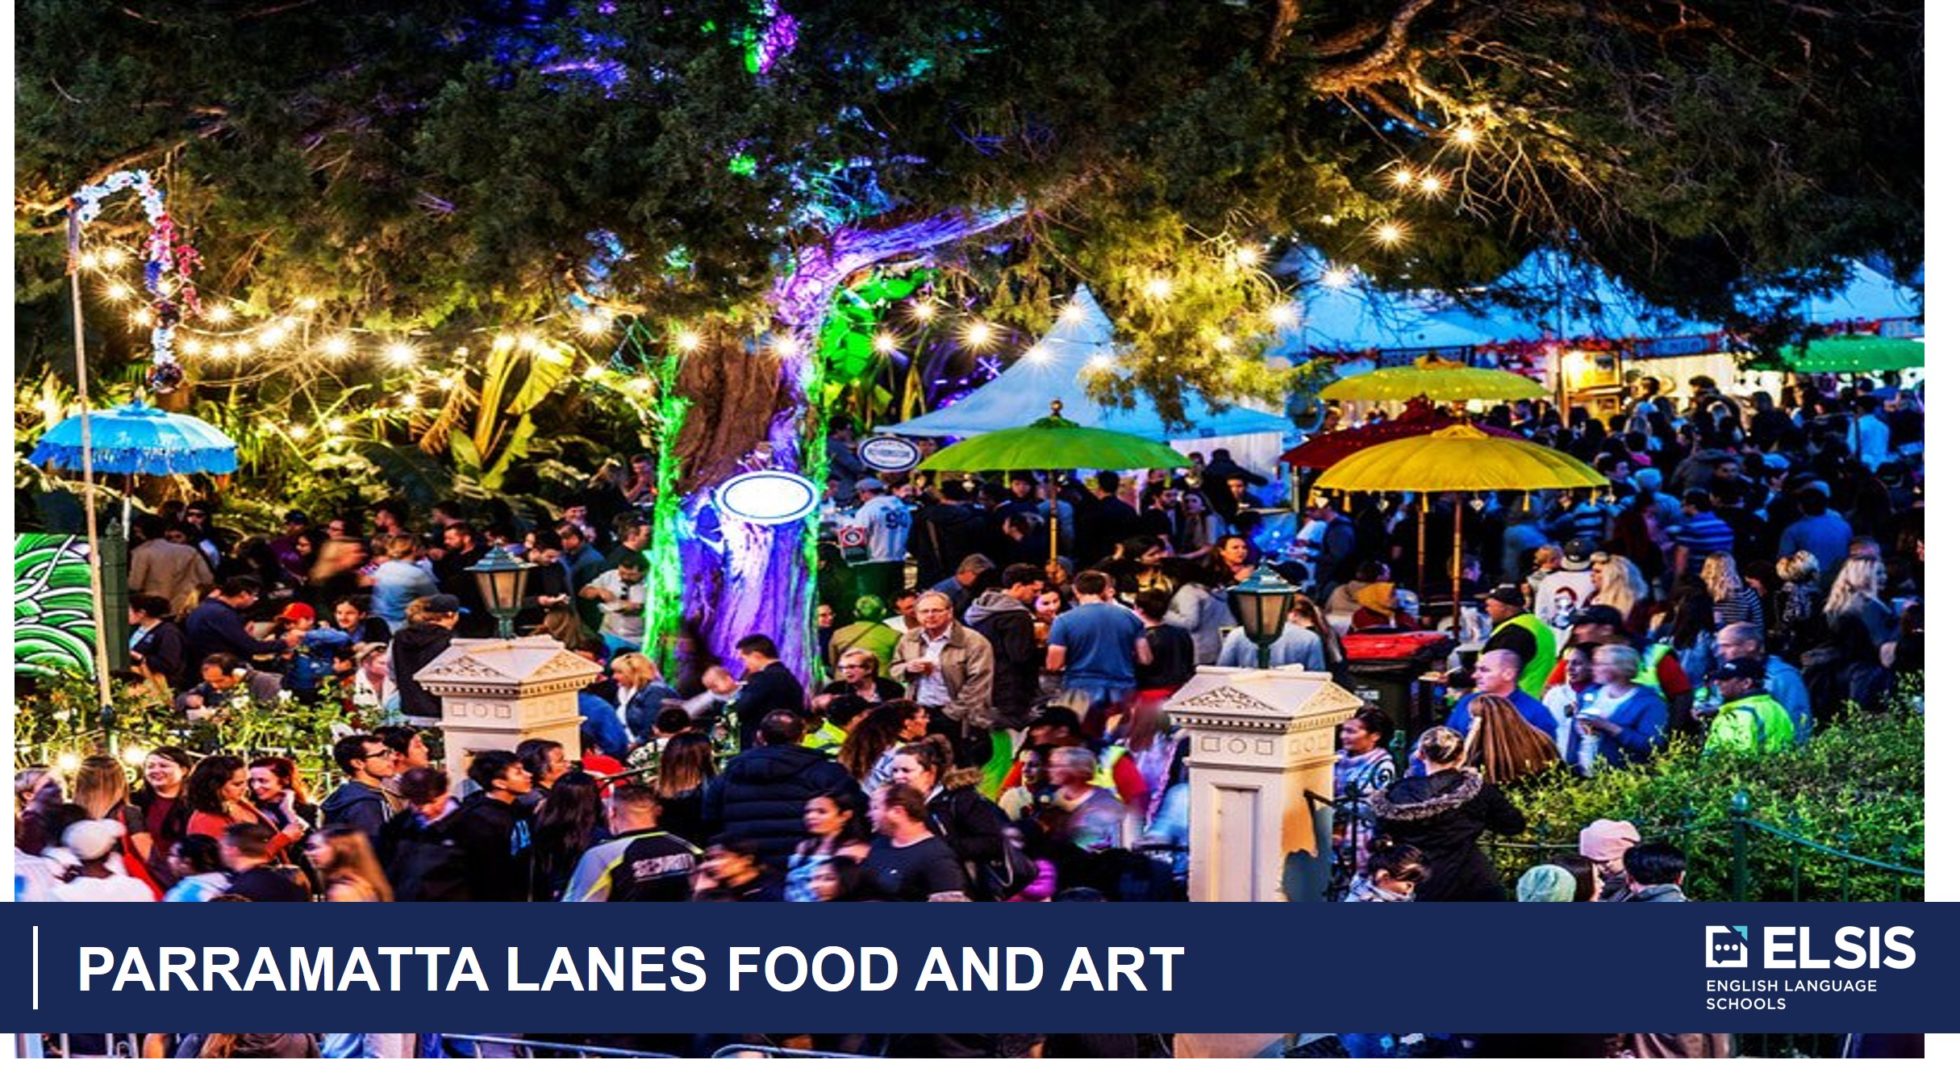 Parramatta lanes food and art